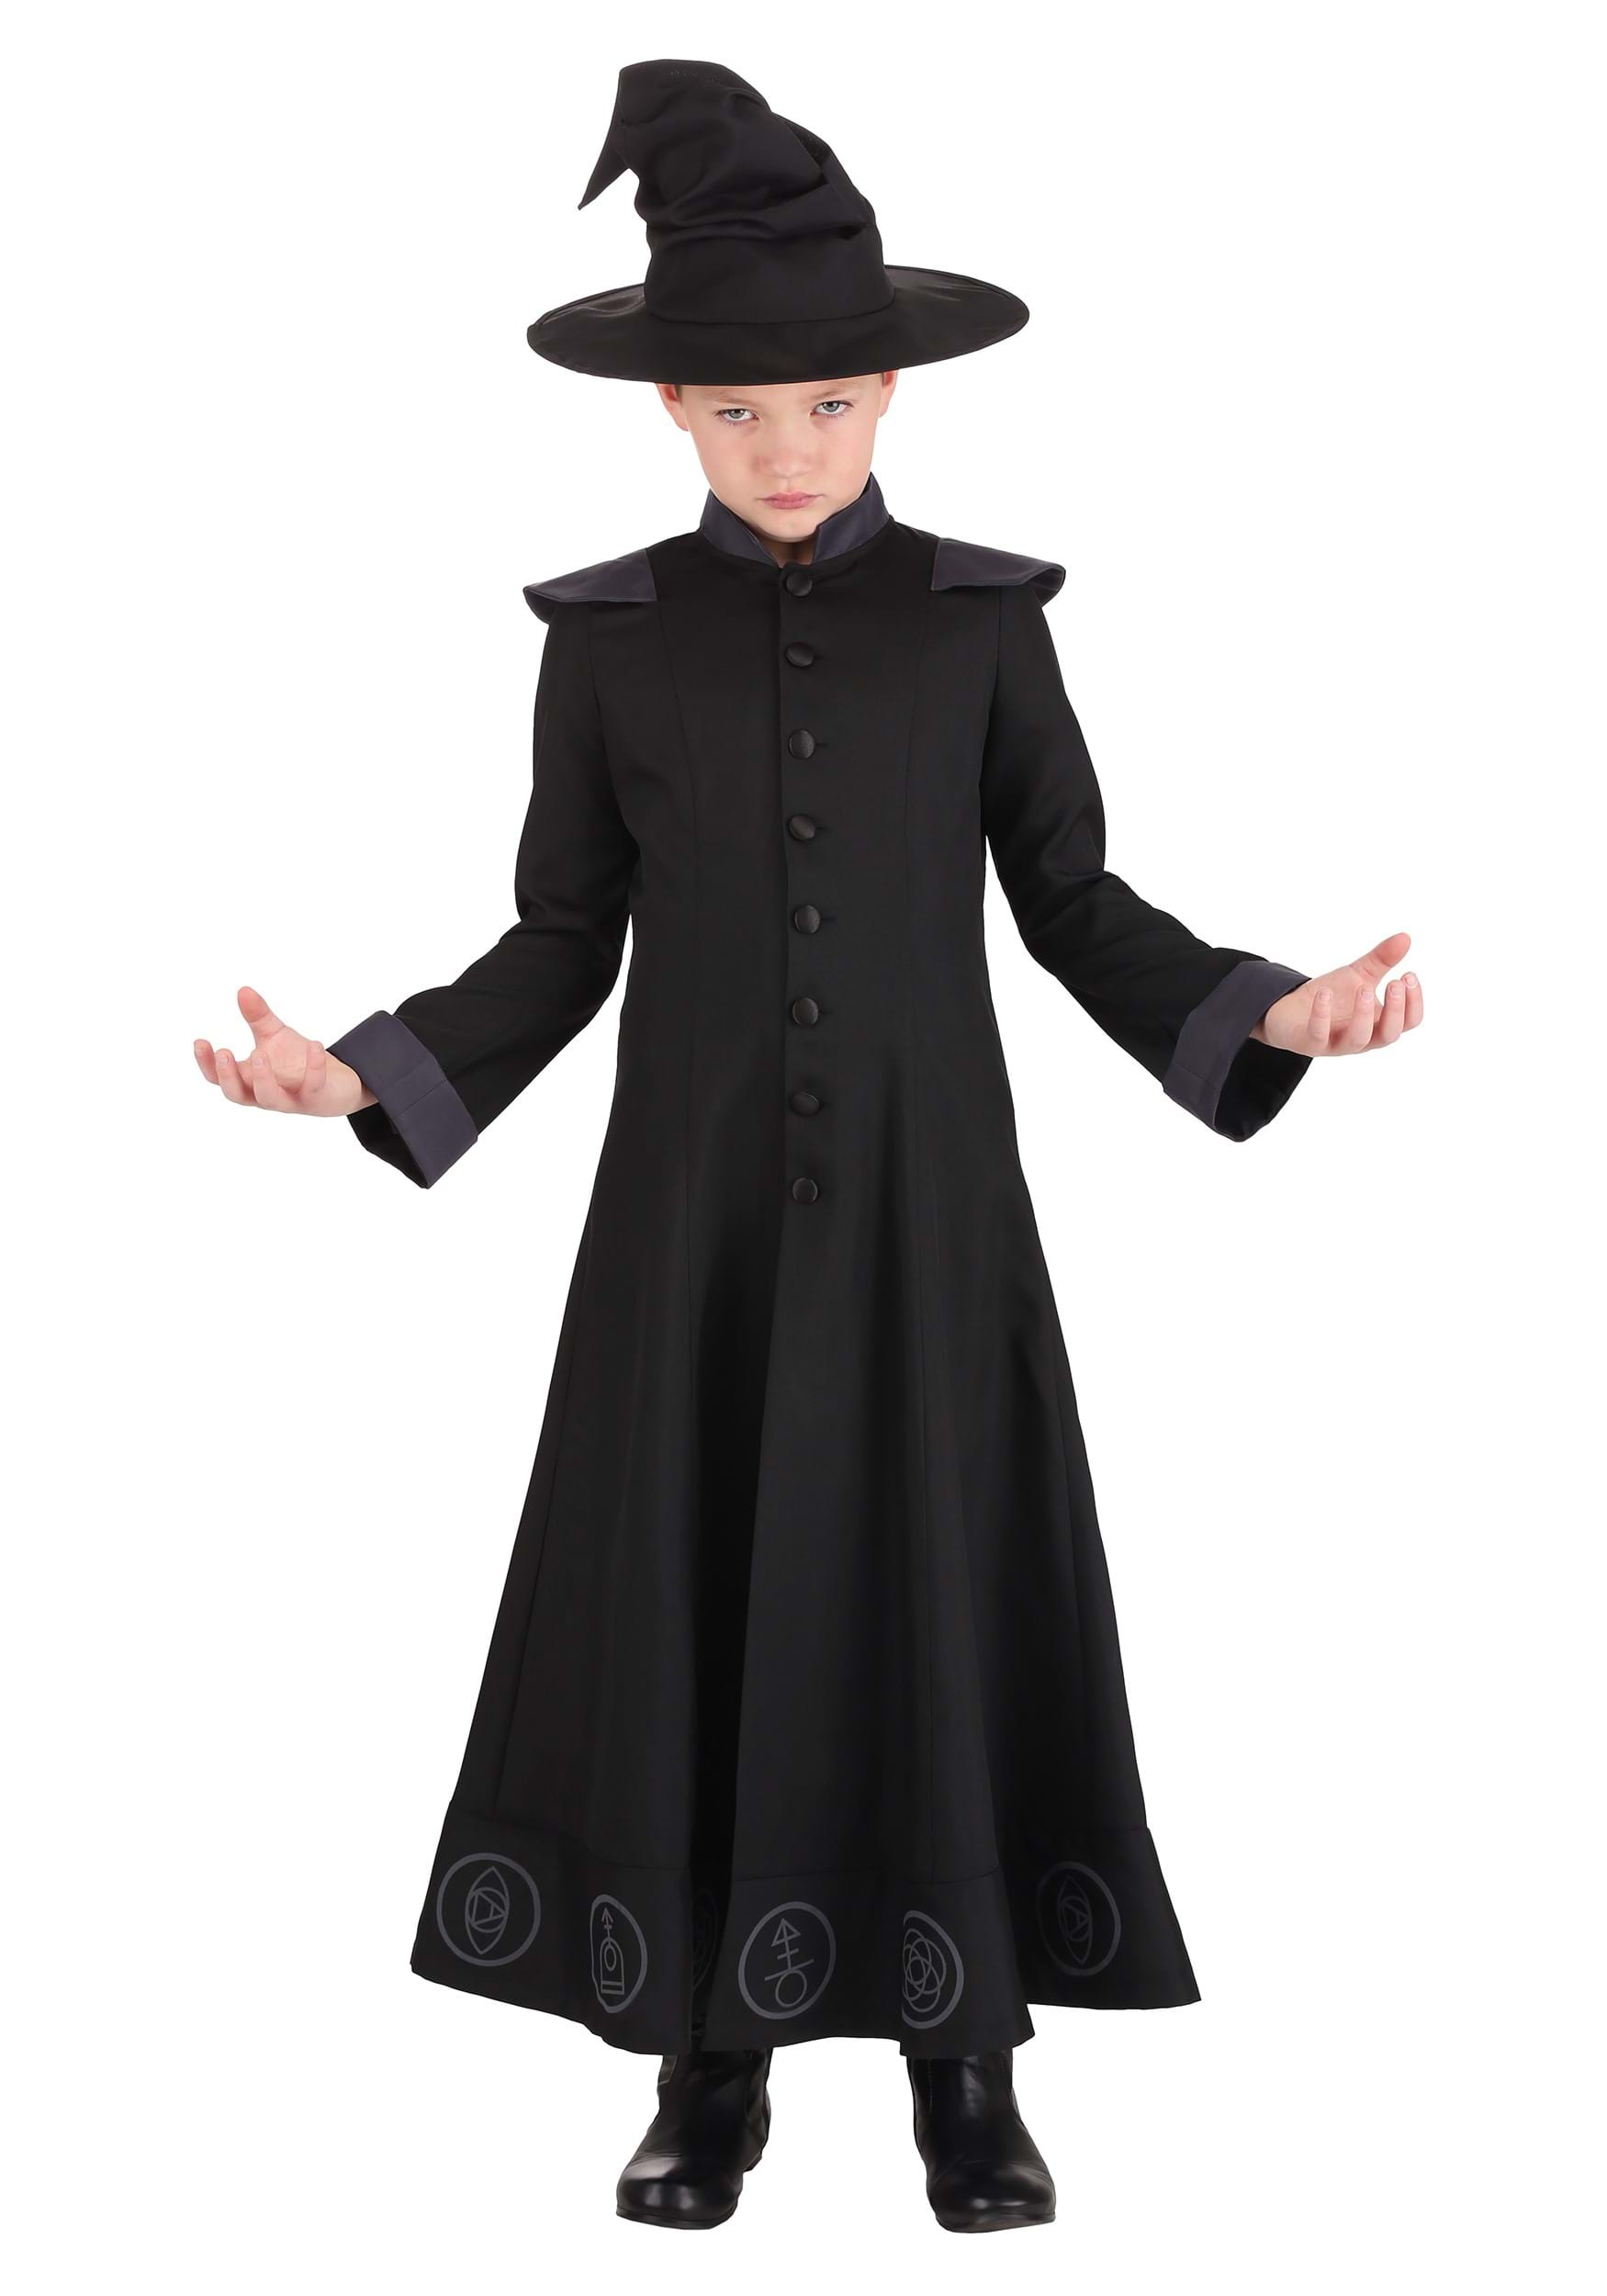 Photos - Fancy Dress FUN Costumes Warlock Kid's Costume Black